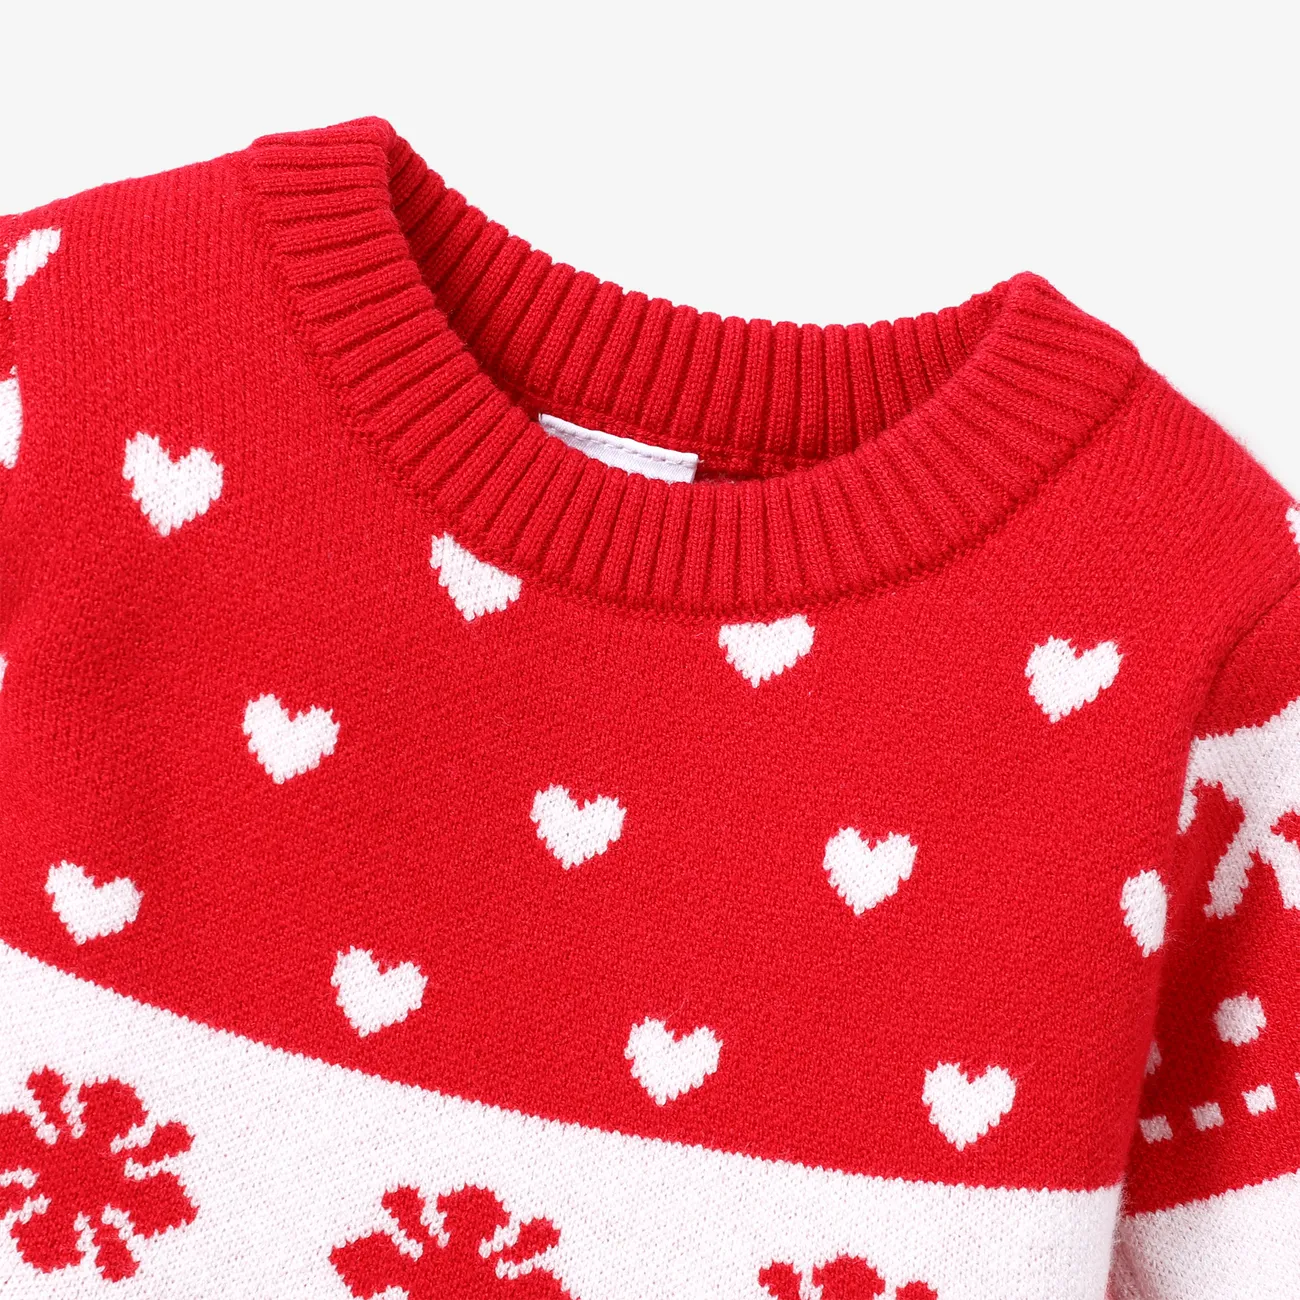 Christmas Baby Girl Sweet Sweater Dress Red big image 1